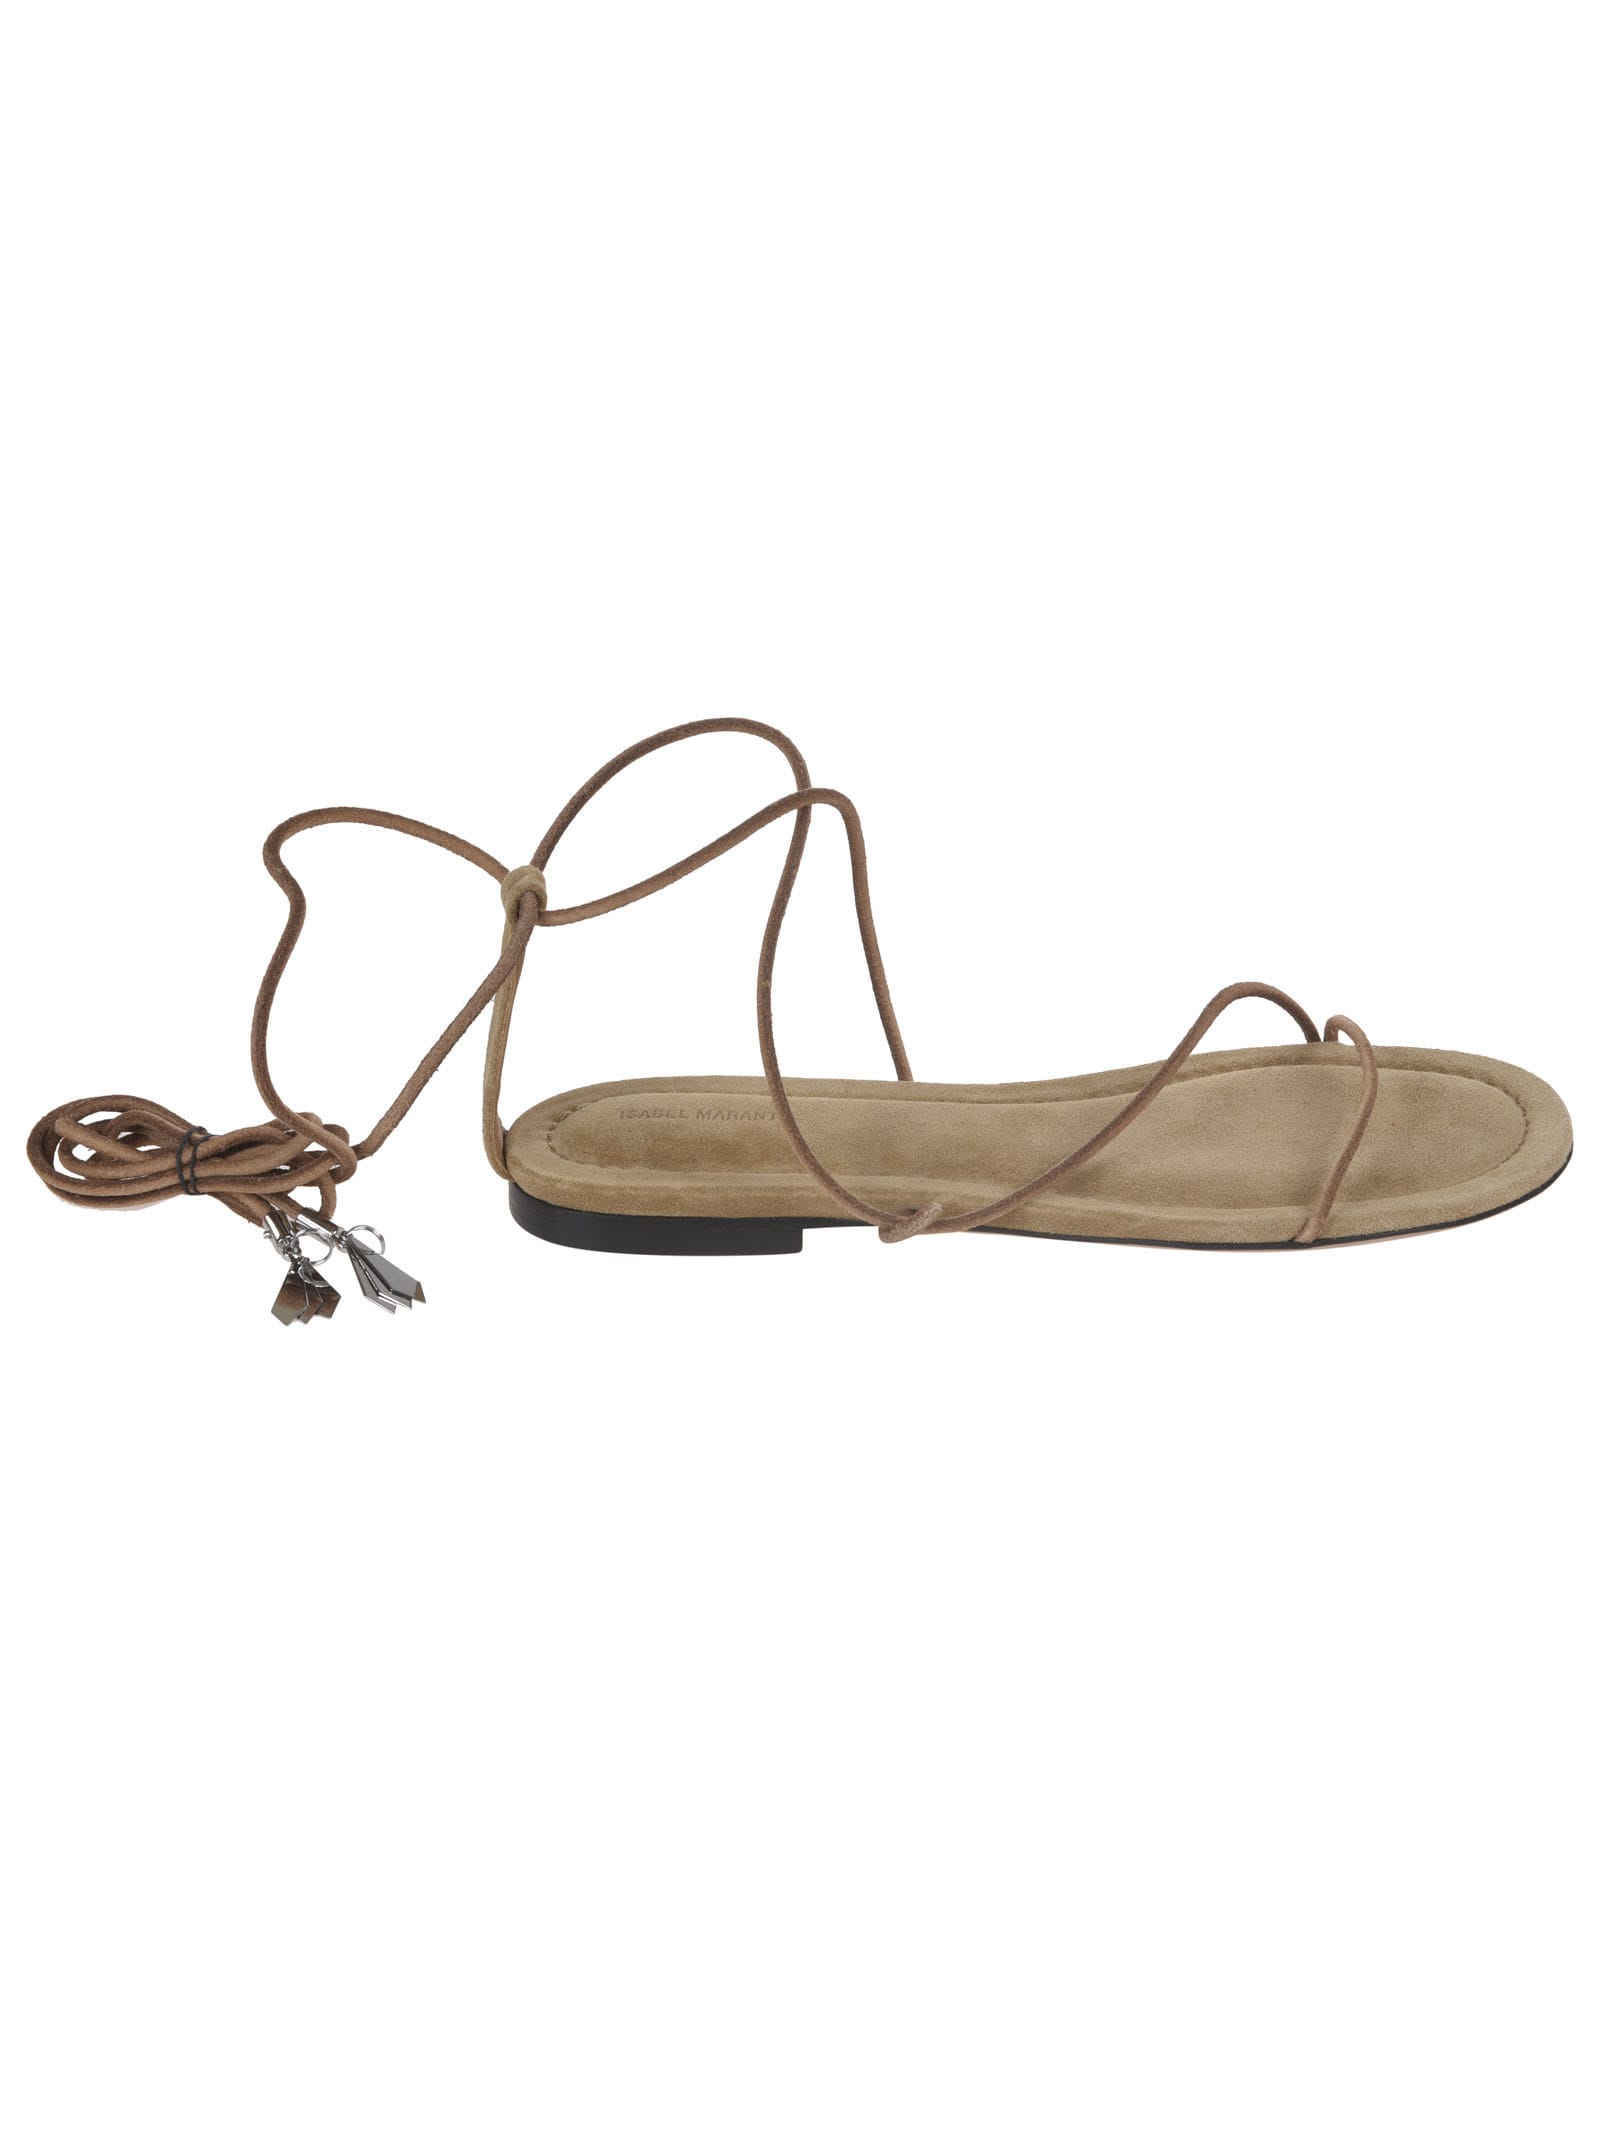 Buy Isabel Marant Abila Flat Sandals online, shop Isabel Marant shoes with free shipping